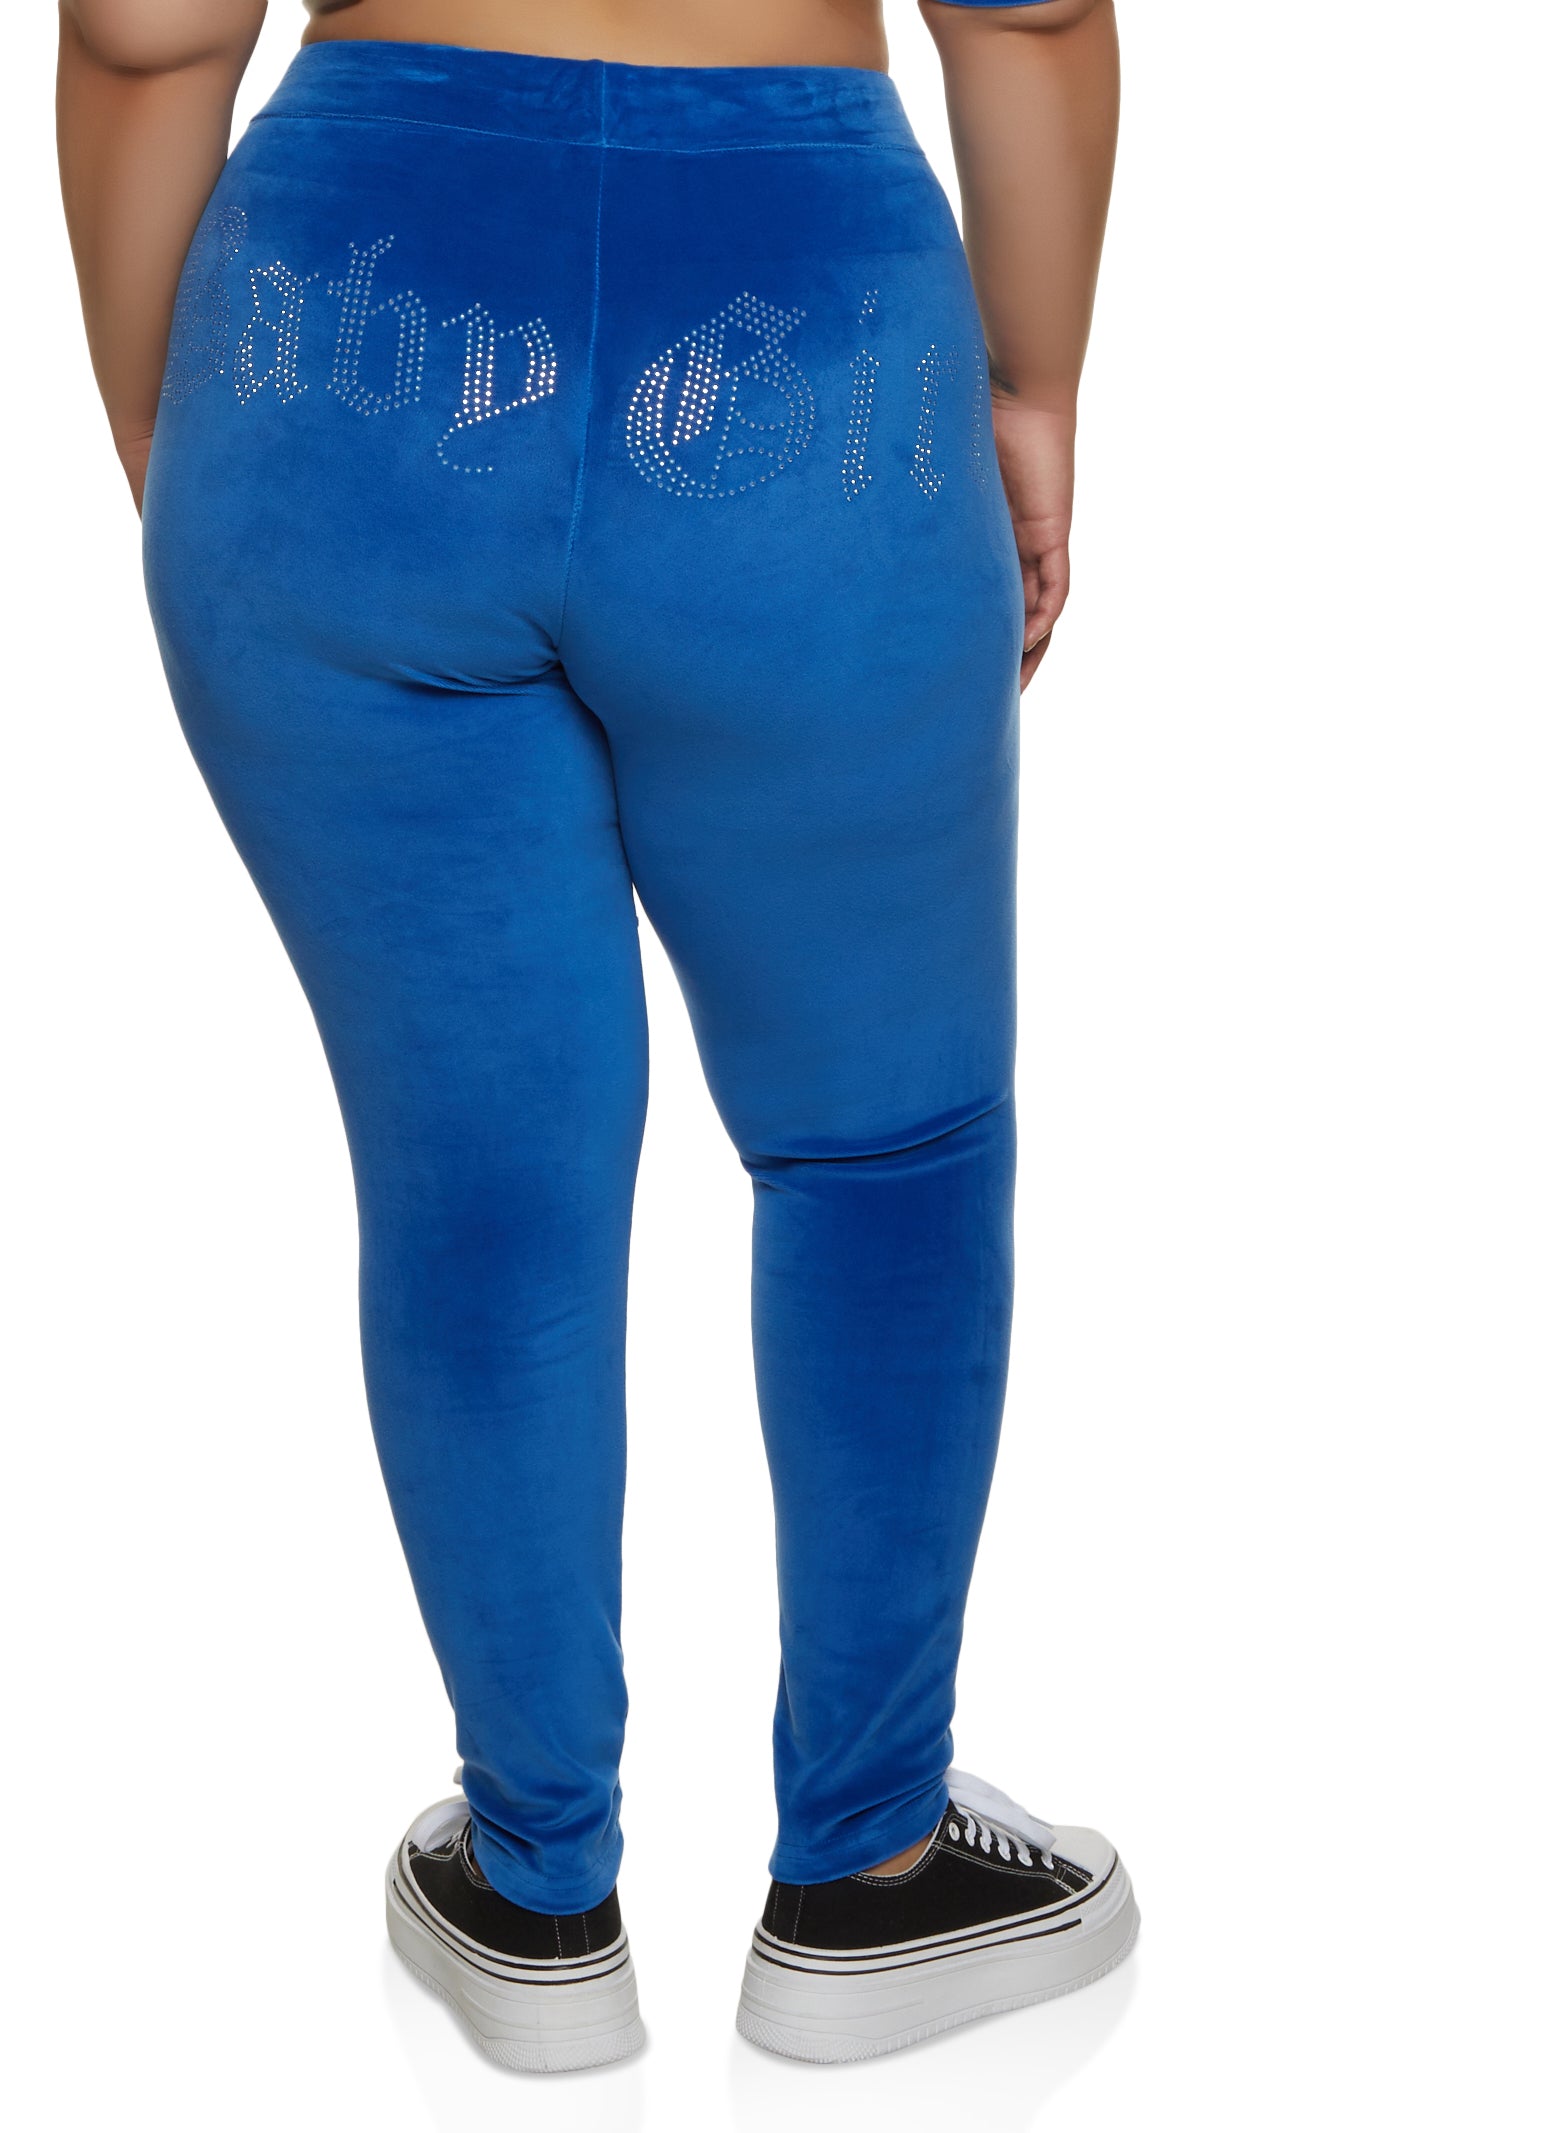 Plus Size Baby Girl Rhinestone Studded Leggings - Royal Blue